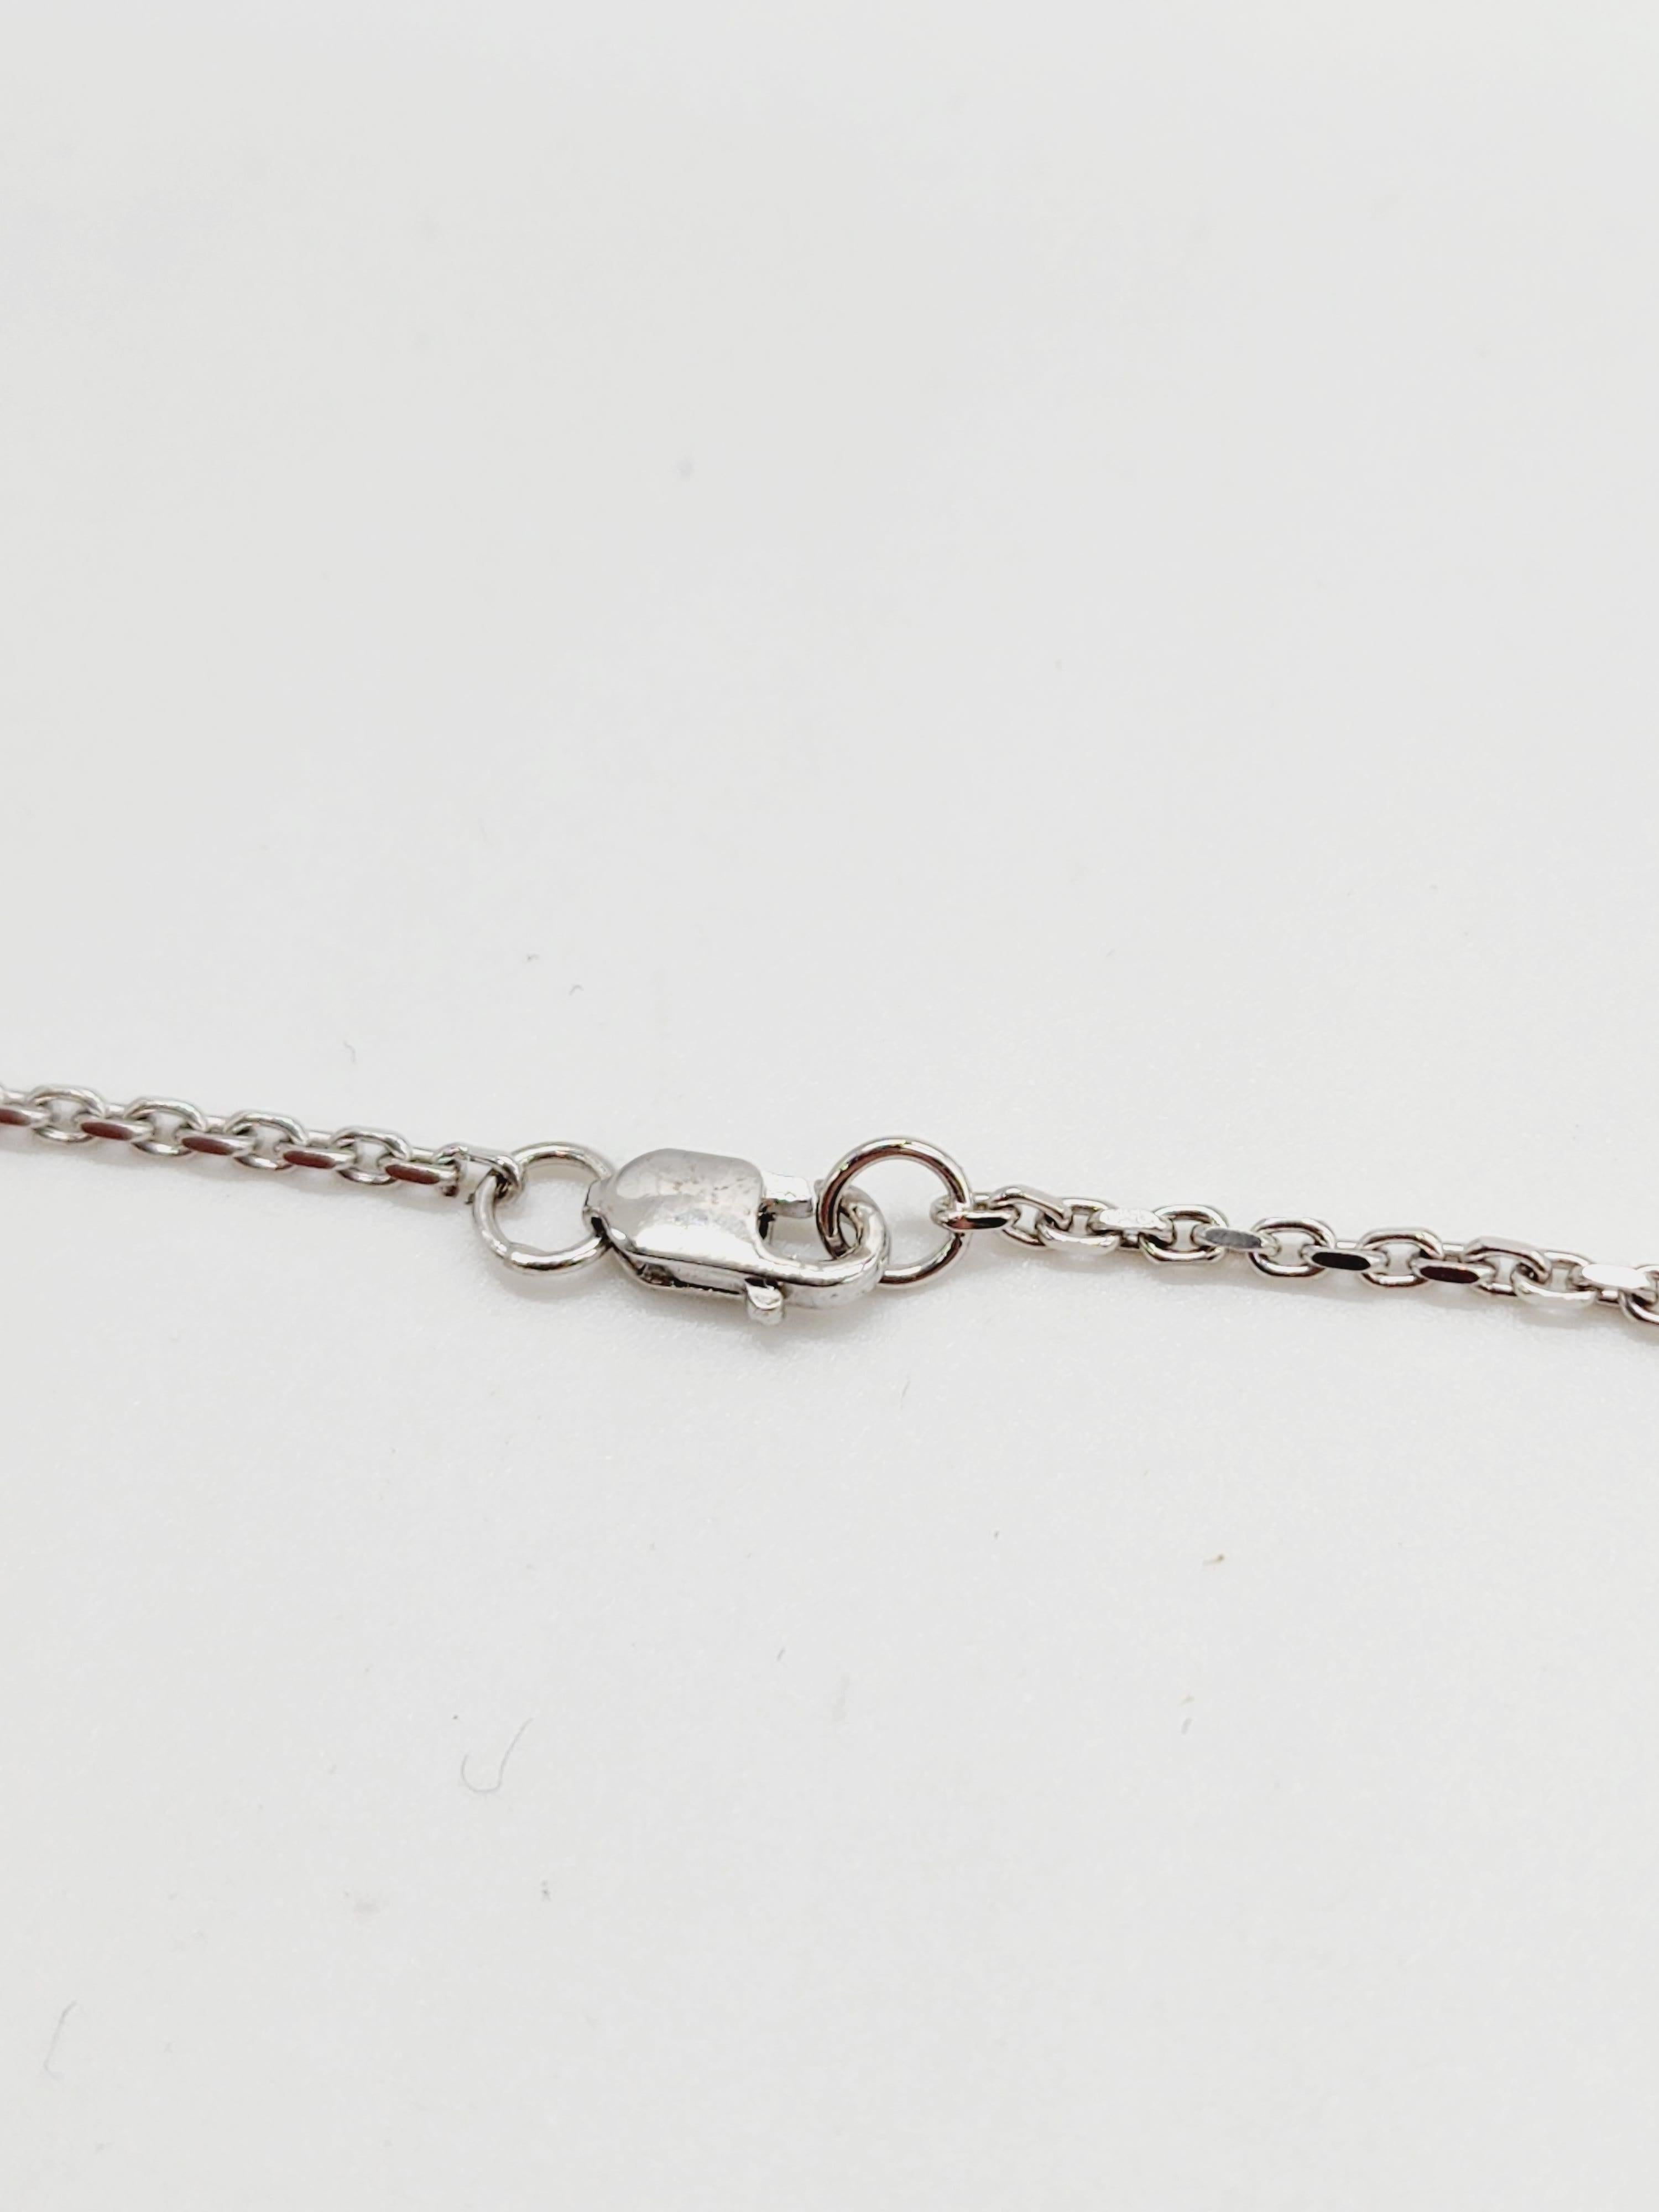 Round Cut 5.85 Carats Mini Diamond Tennis Necklace Chain 14 Karat White Gold 18'' For Sale